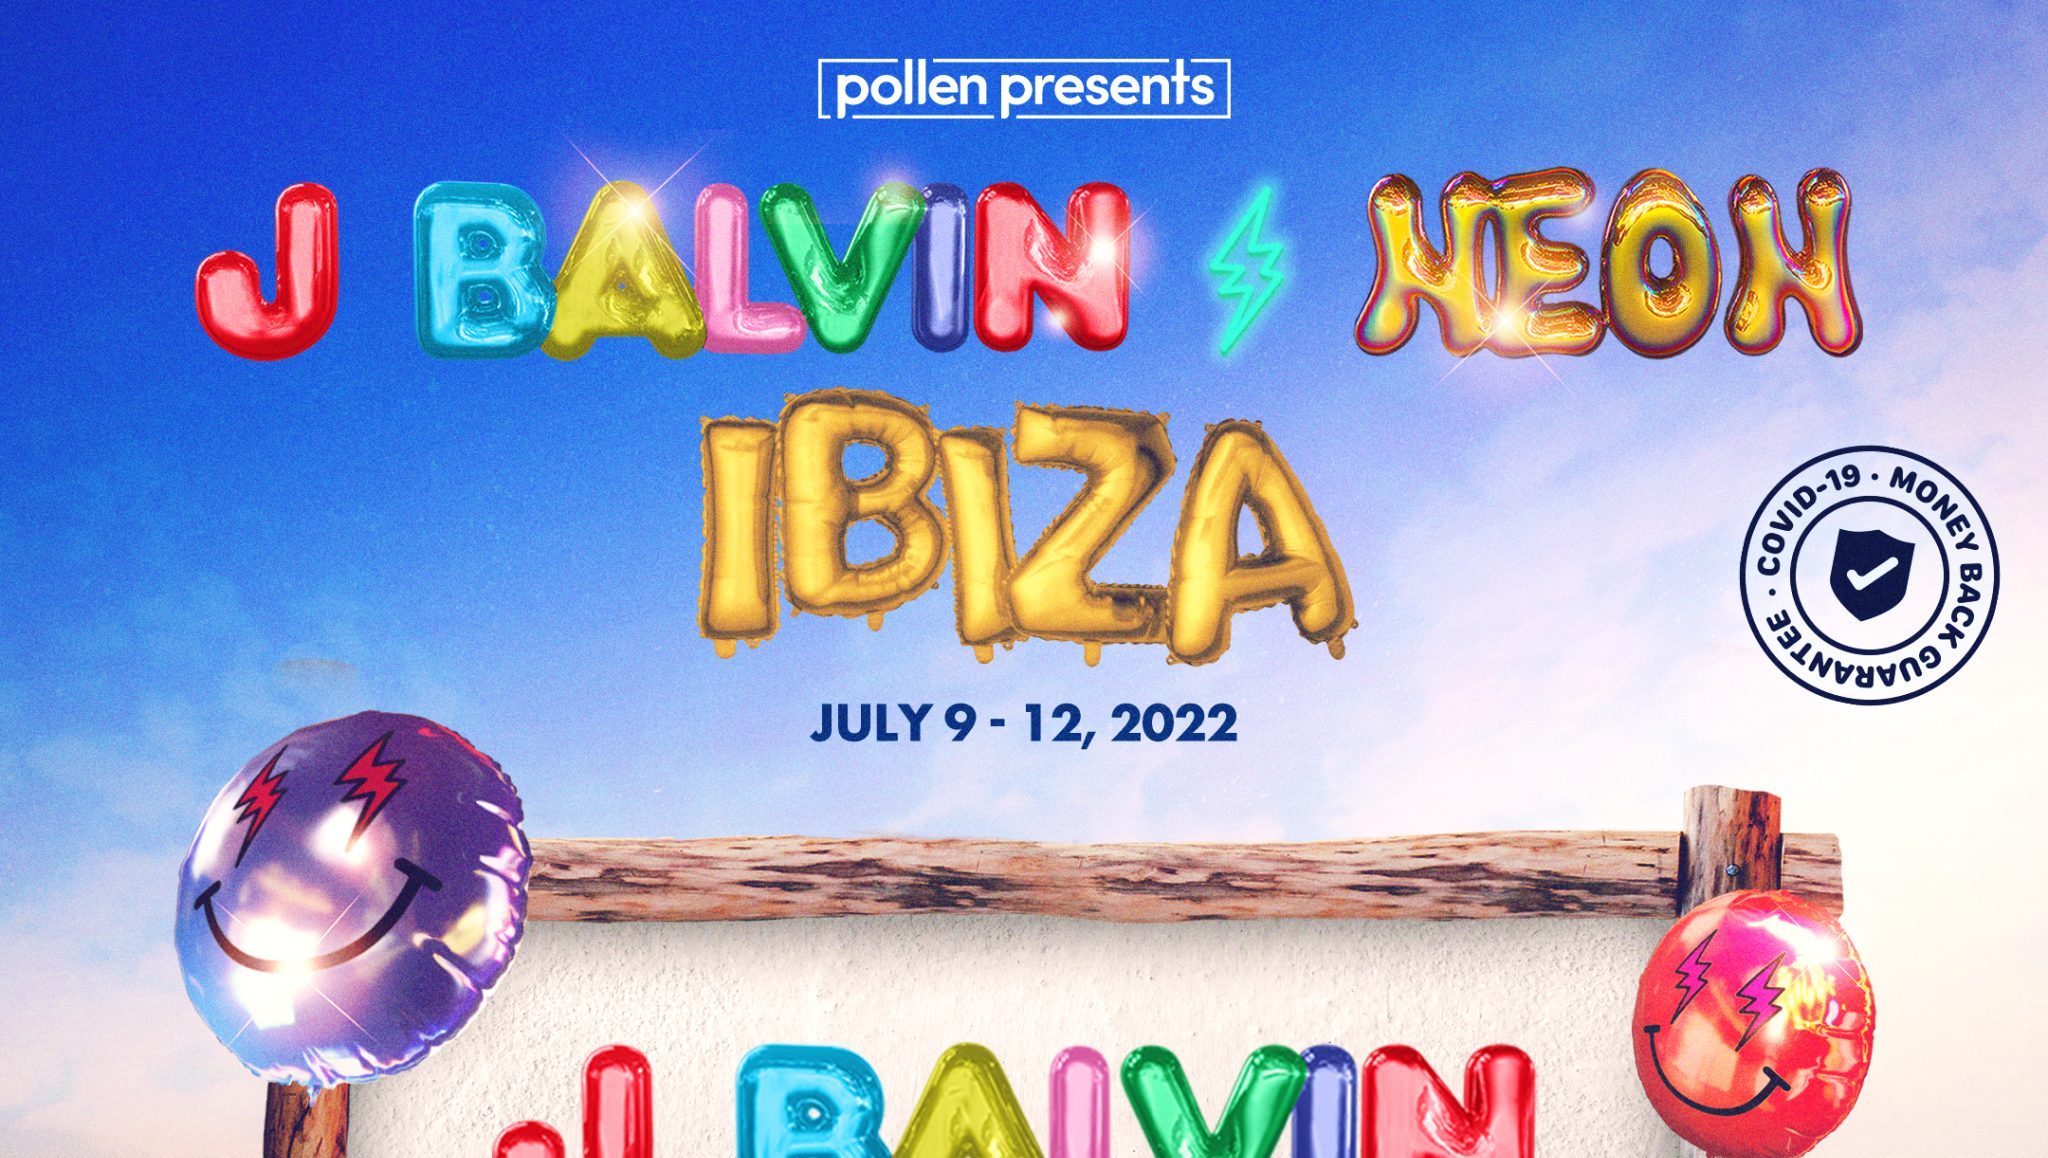 J Balvin Releases New Album, 'Jose,' Announces North American Tour